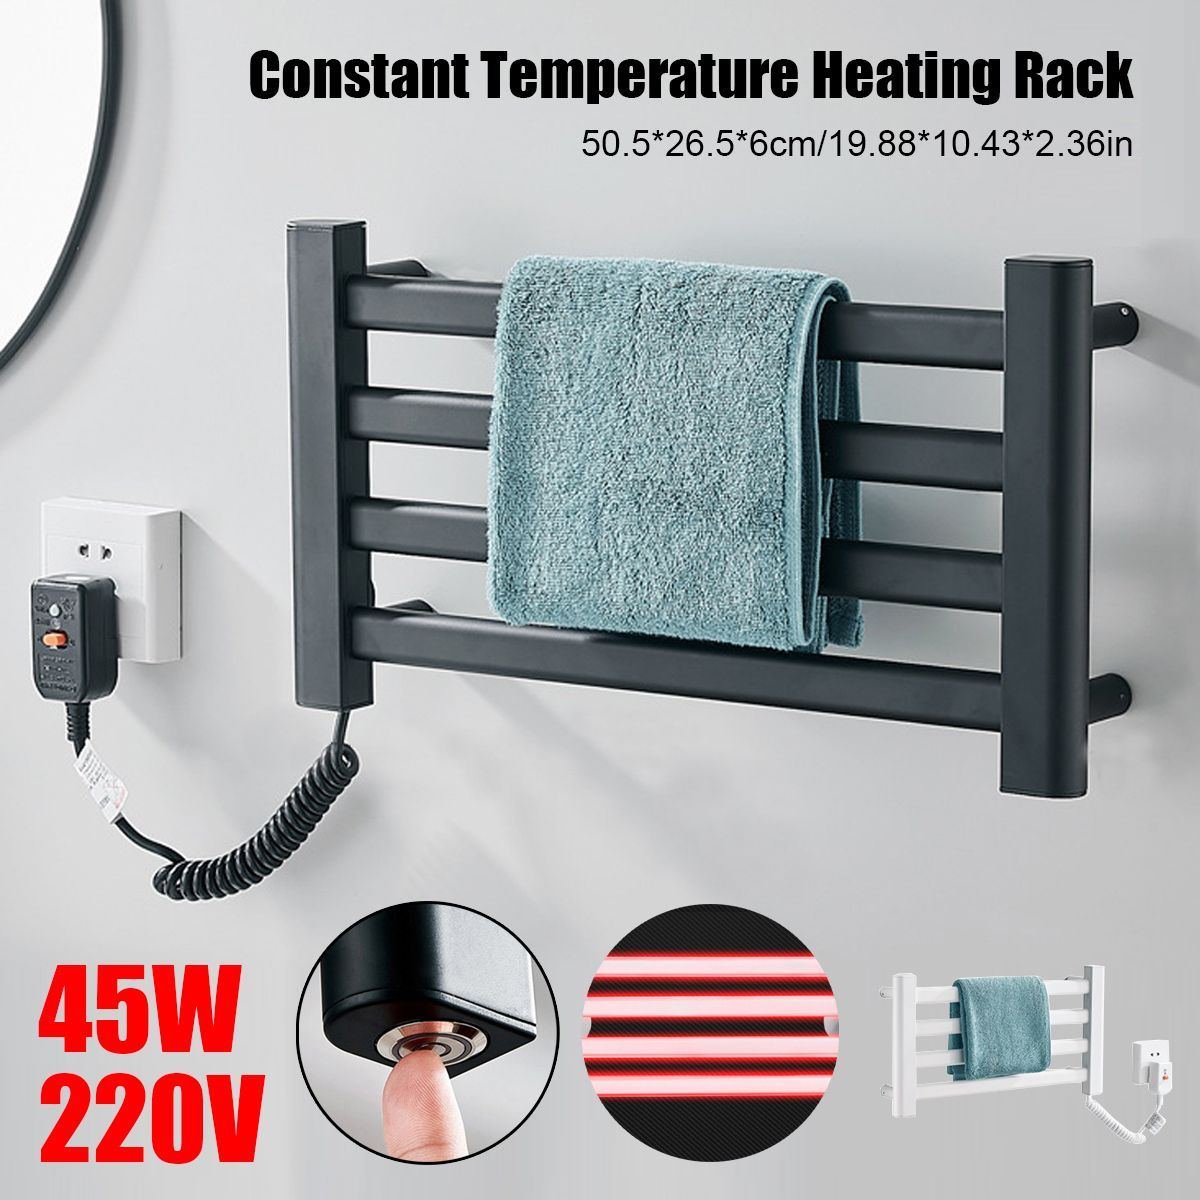 45W-55-Constant-Temperature-Heating-Rack-Waterproof-IPX4-Electric-Towel-Warmer-1761639